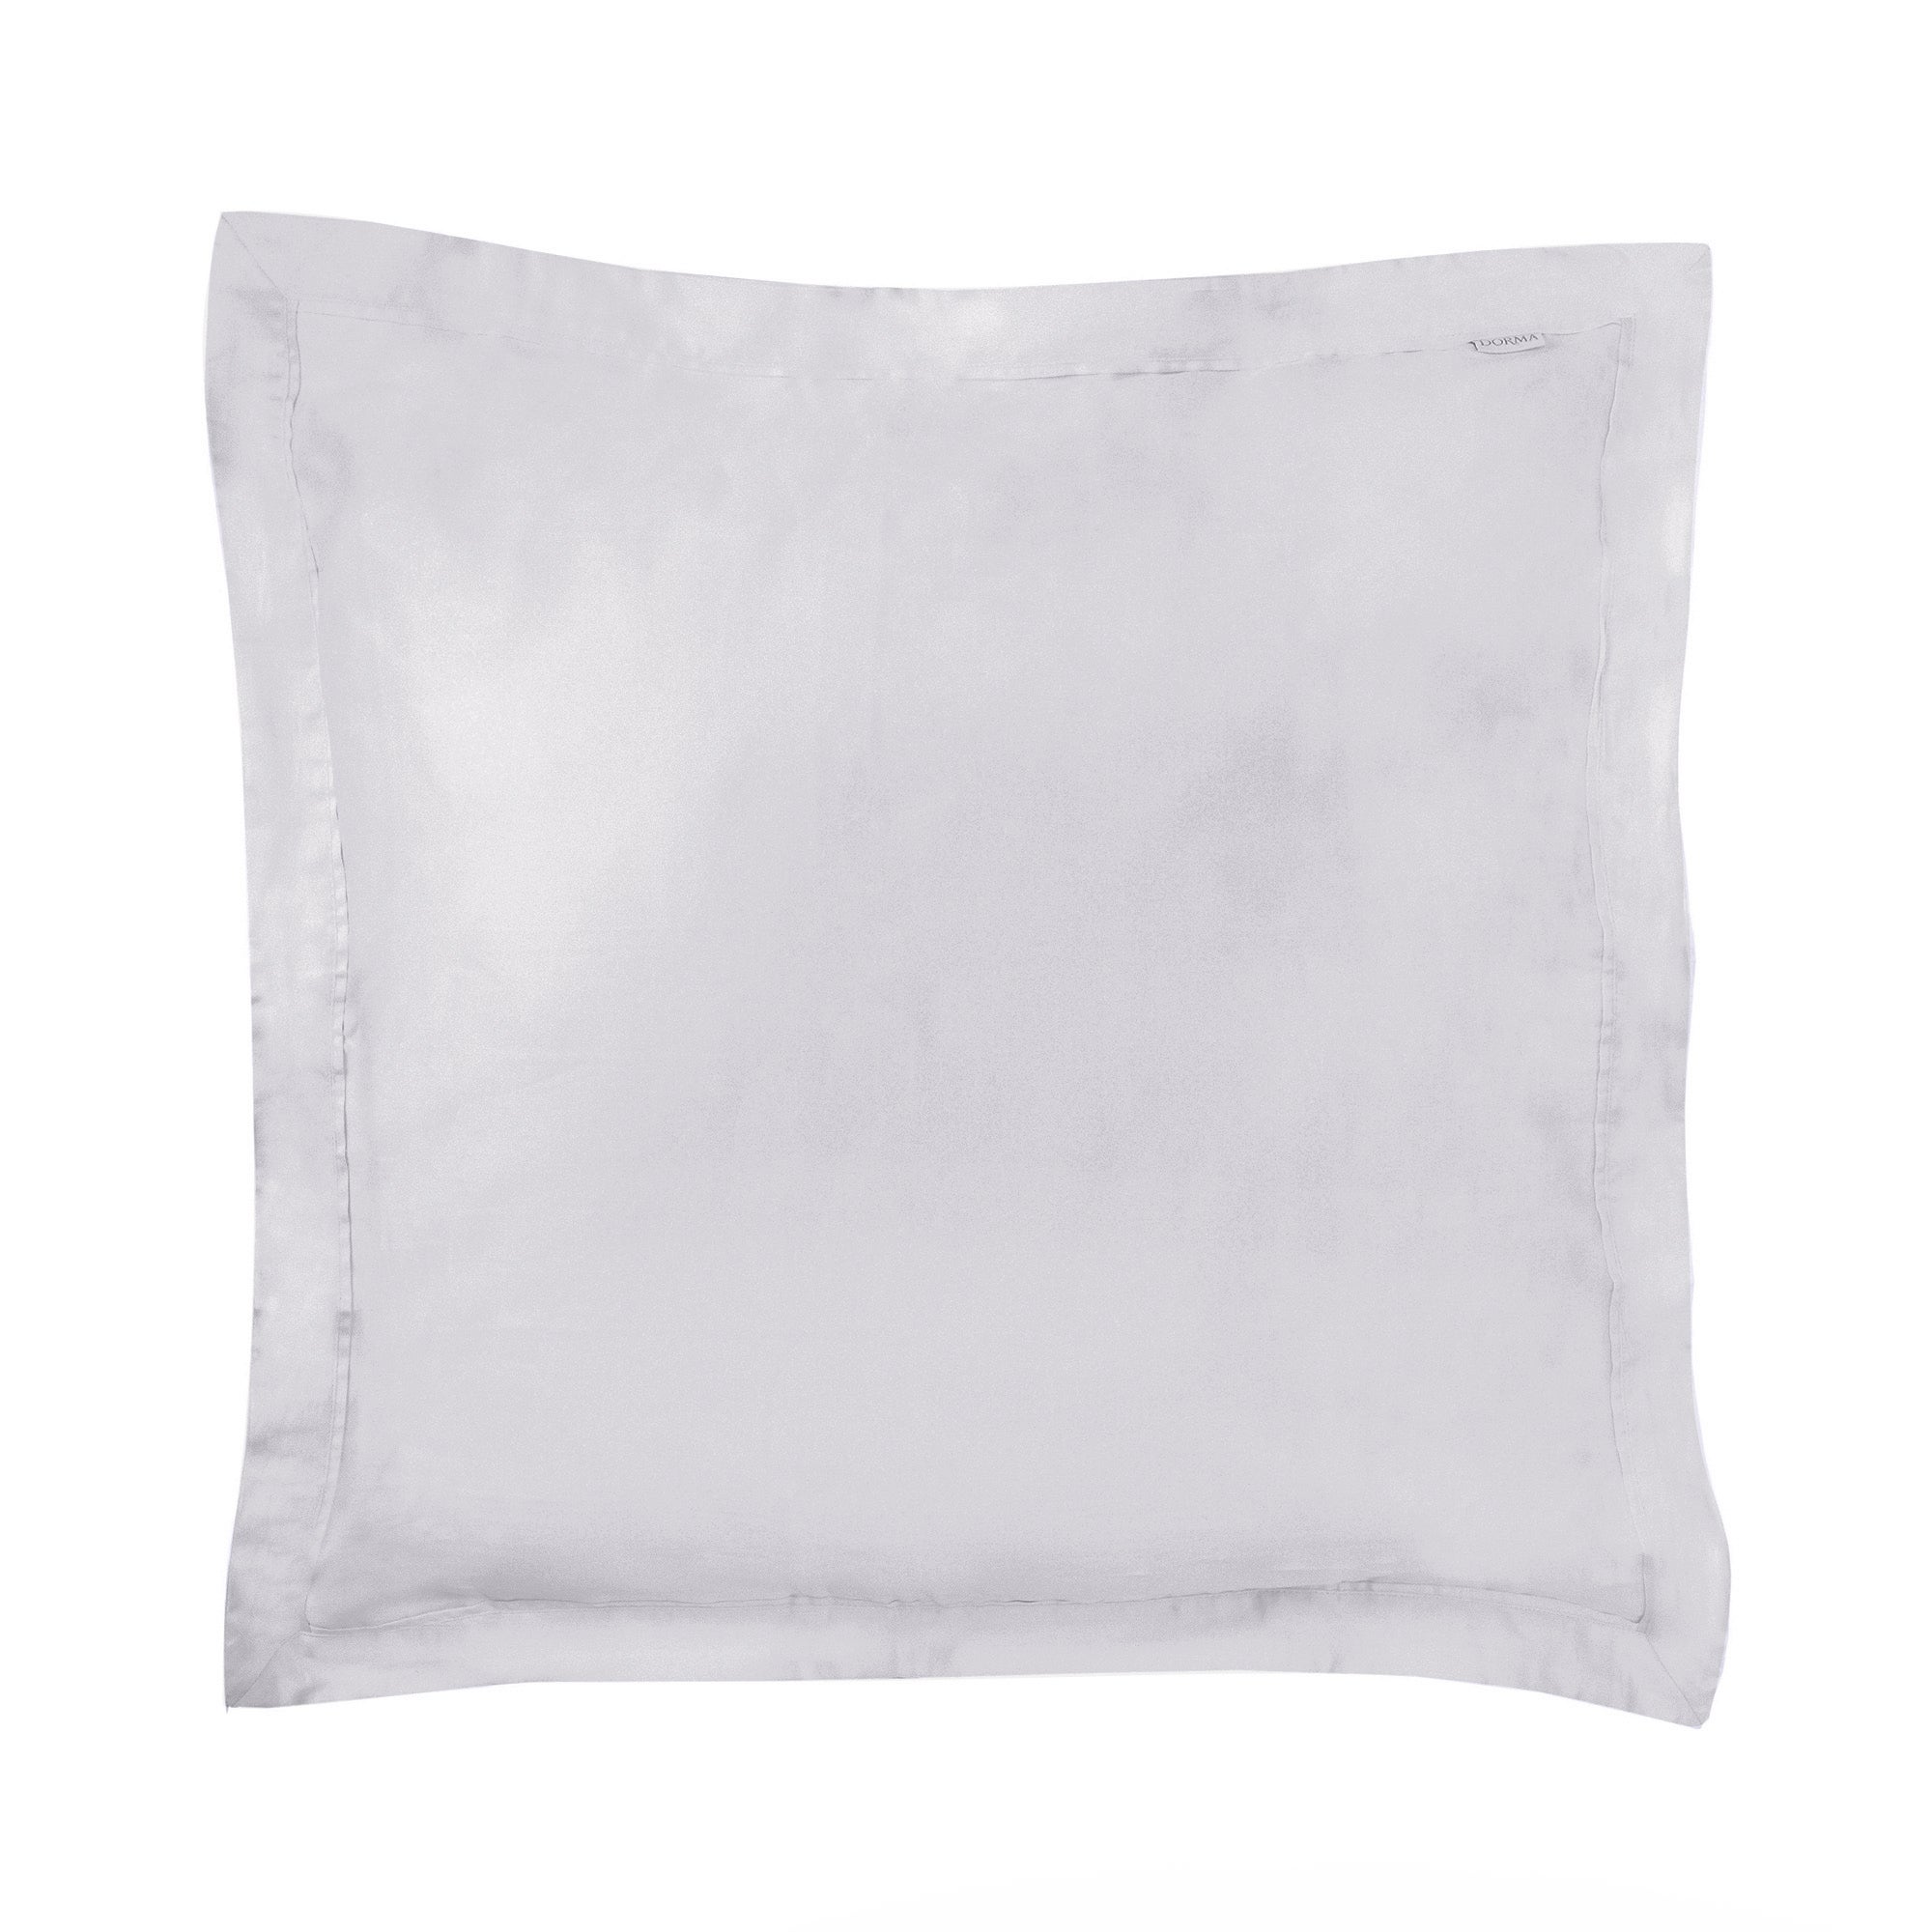 Dorma 500 Thread Count 100% Cotton Sateen Plain Continental Square Pillowcase